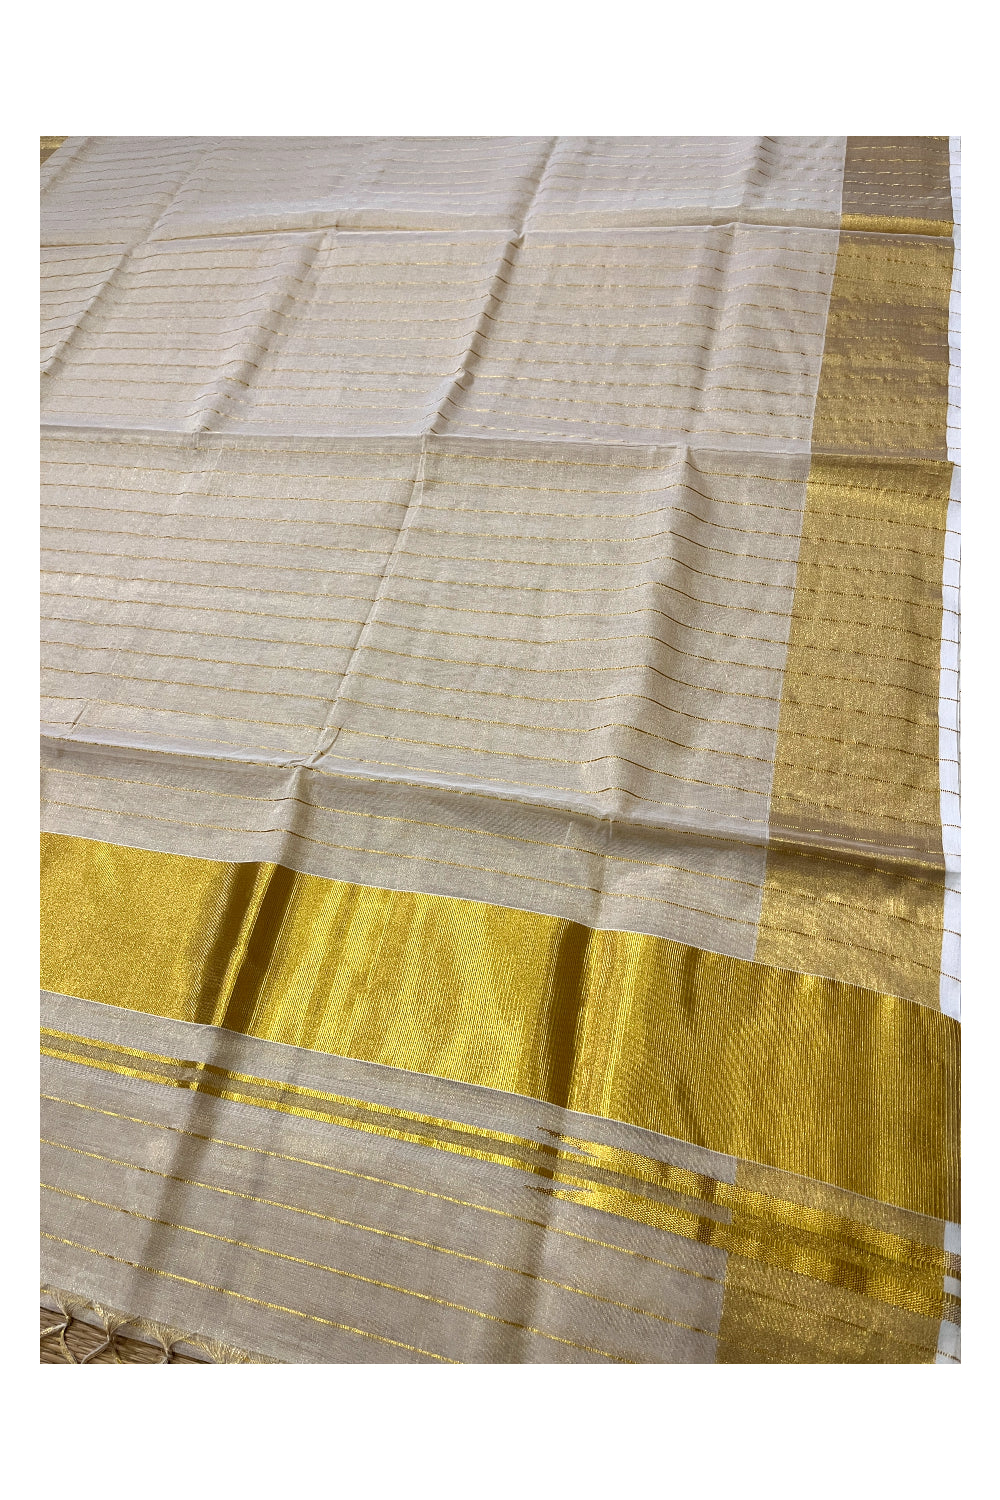 Southloom Handloom Premium Kerala Tissue Saree with Kasavu Lines Design Across Body